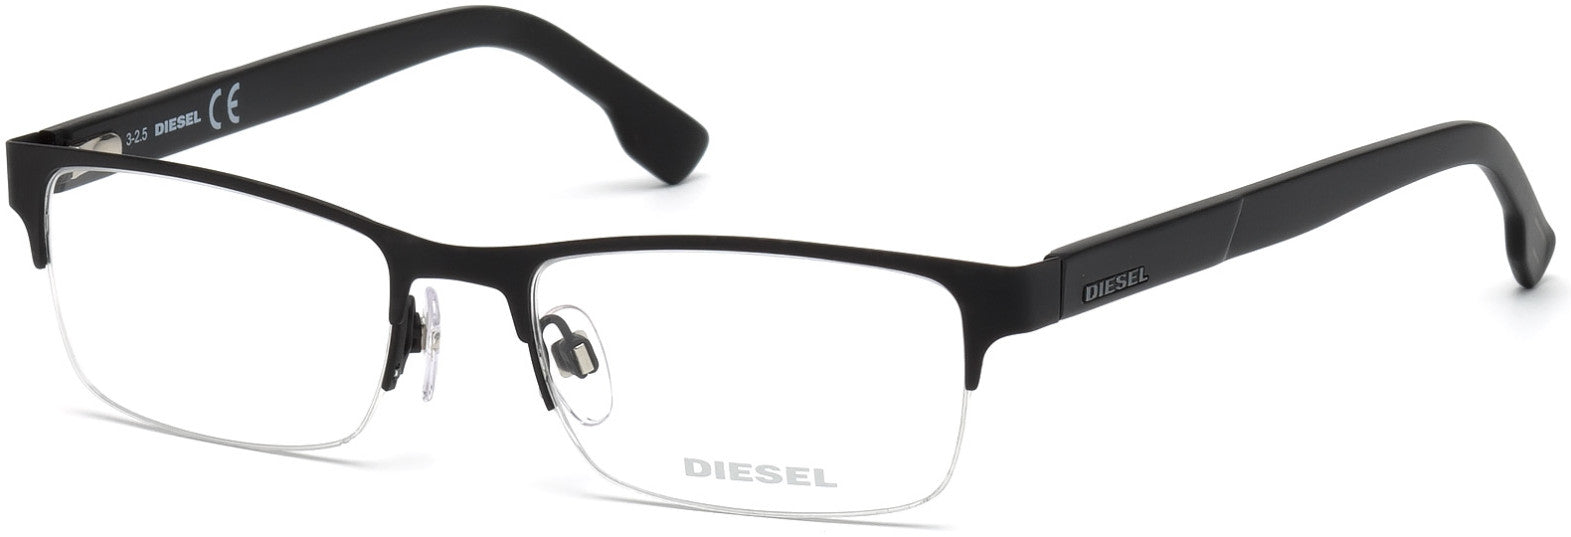 Diesel DL5202 Rectangular Eyeglasses 002-002 - Matte Black